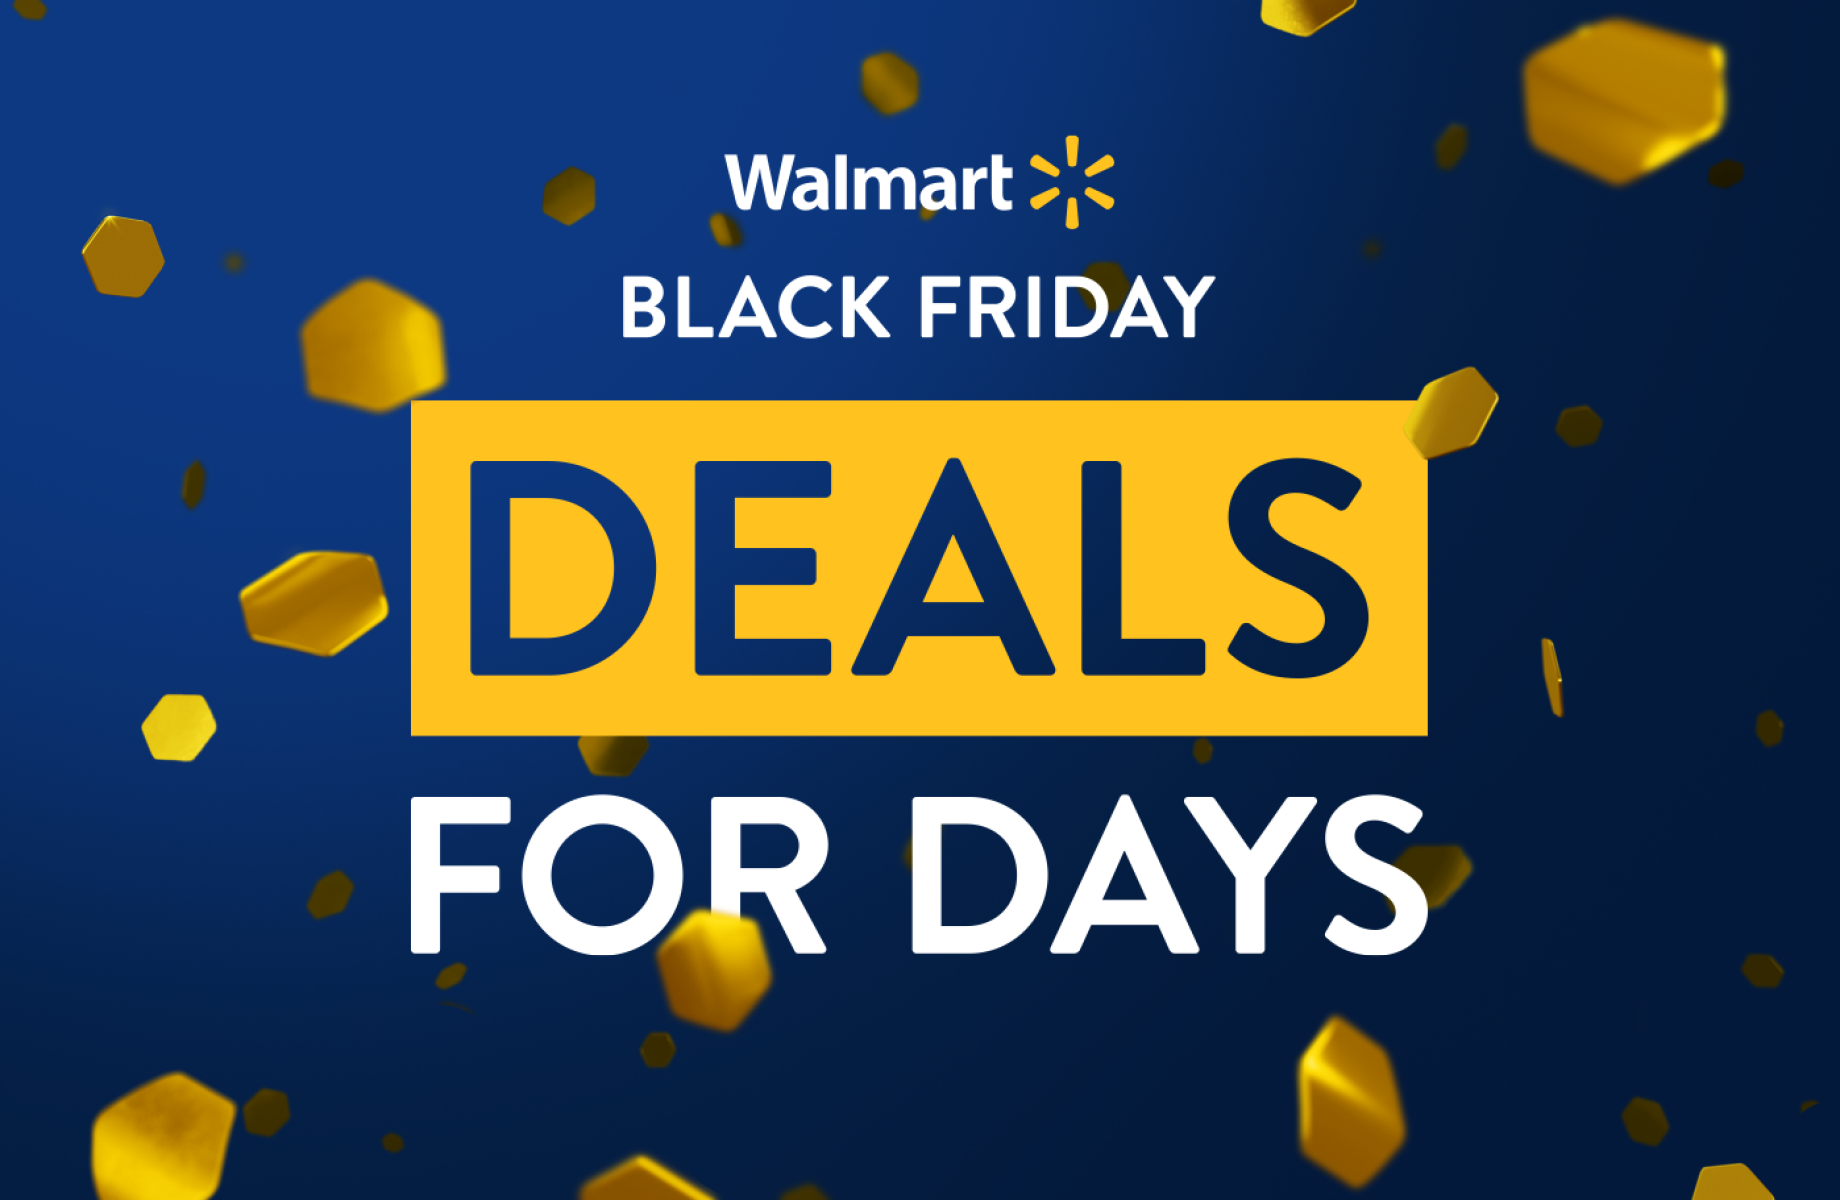 Walmart Deals for Days event